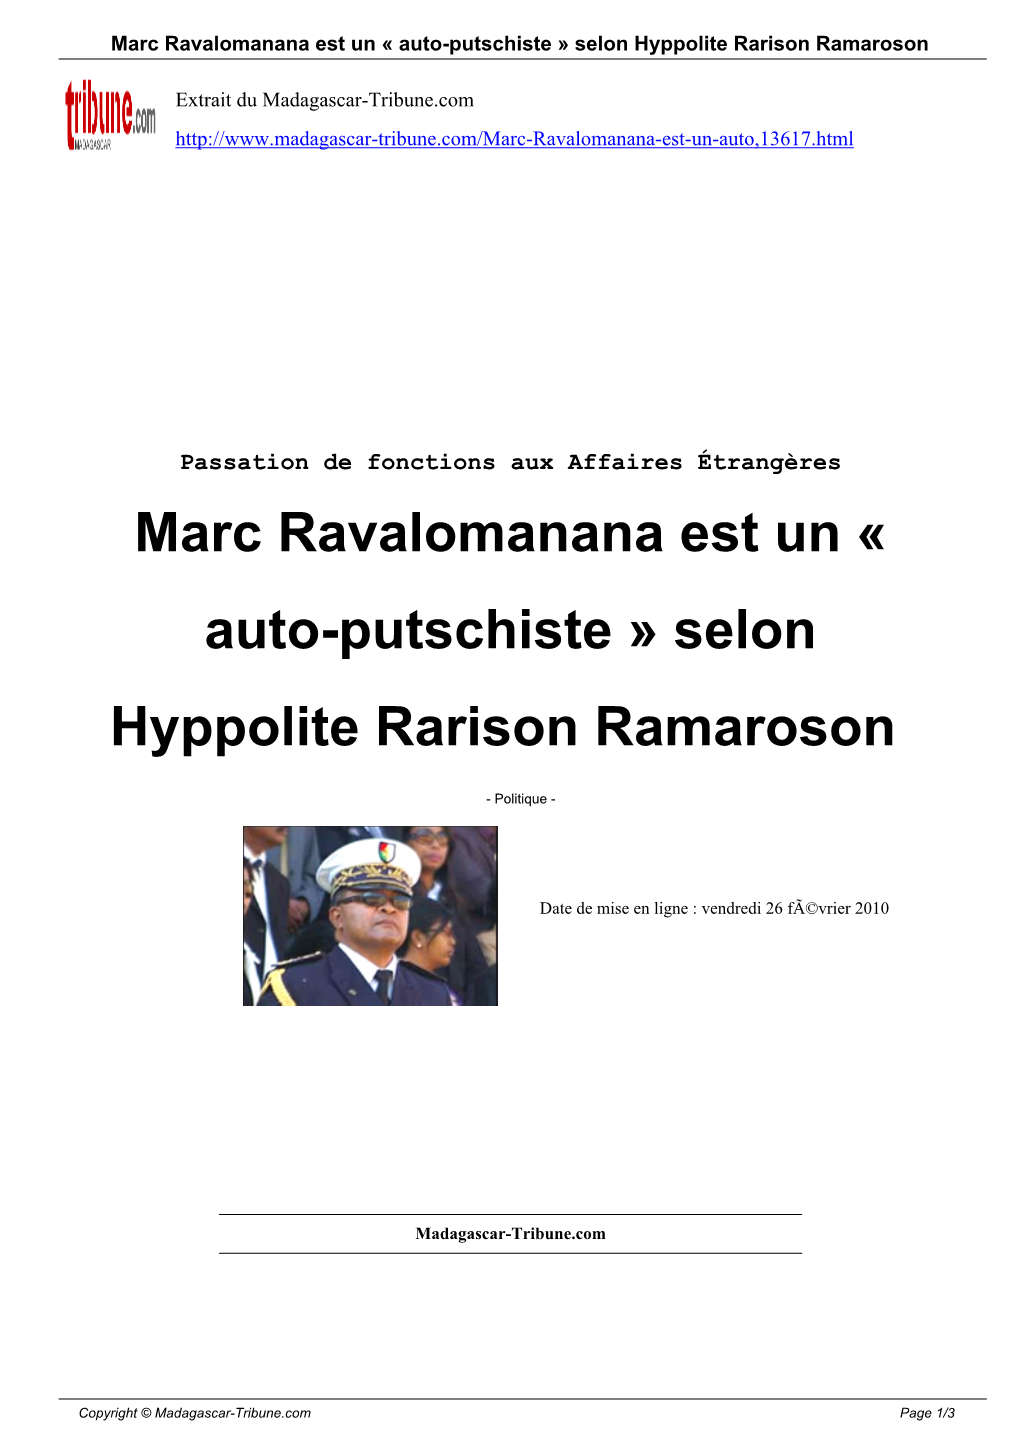 Marc Ravalomanana Est Un « Auto-Putschiste » Selon Hyppolite Rarison Ramaroson